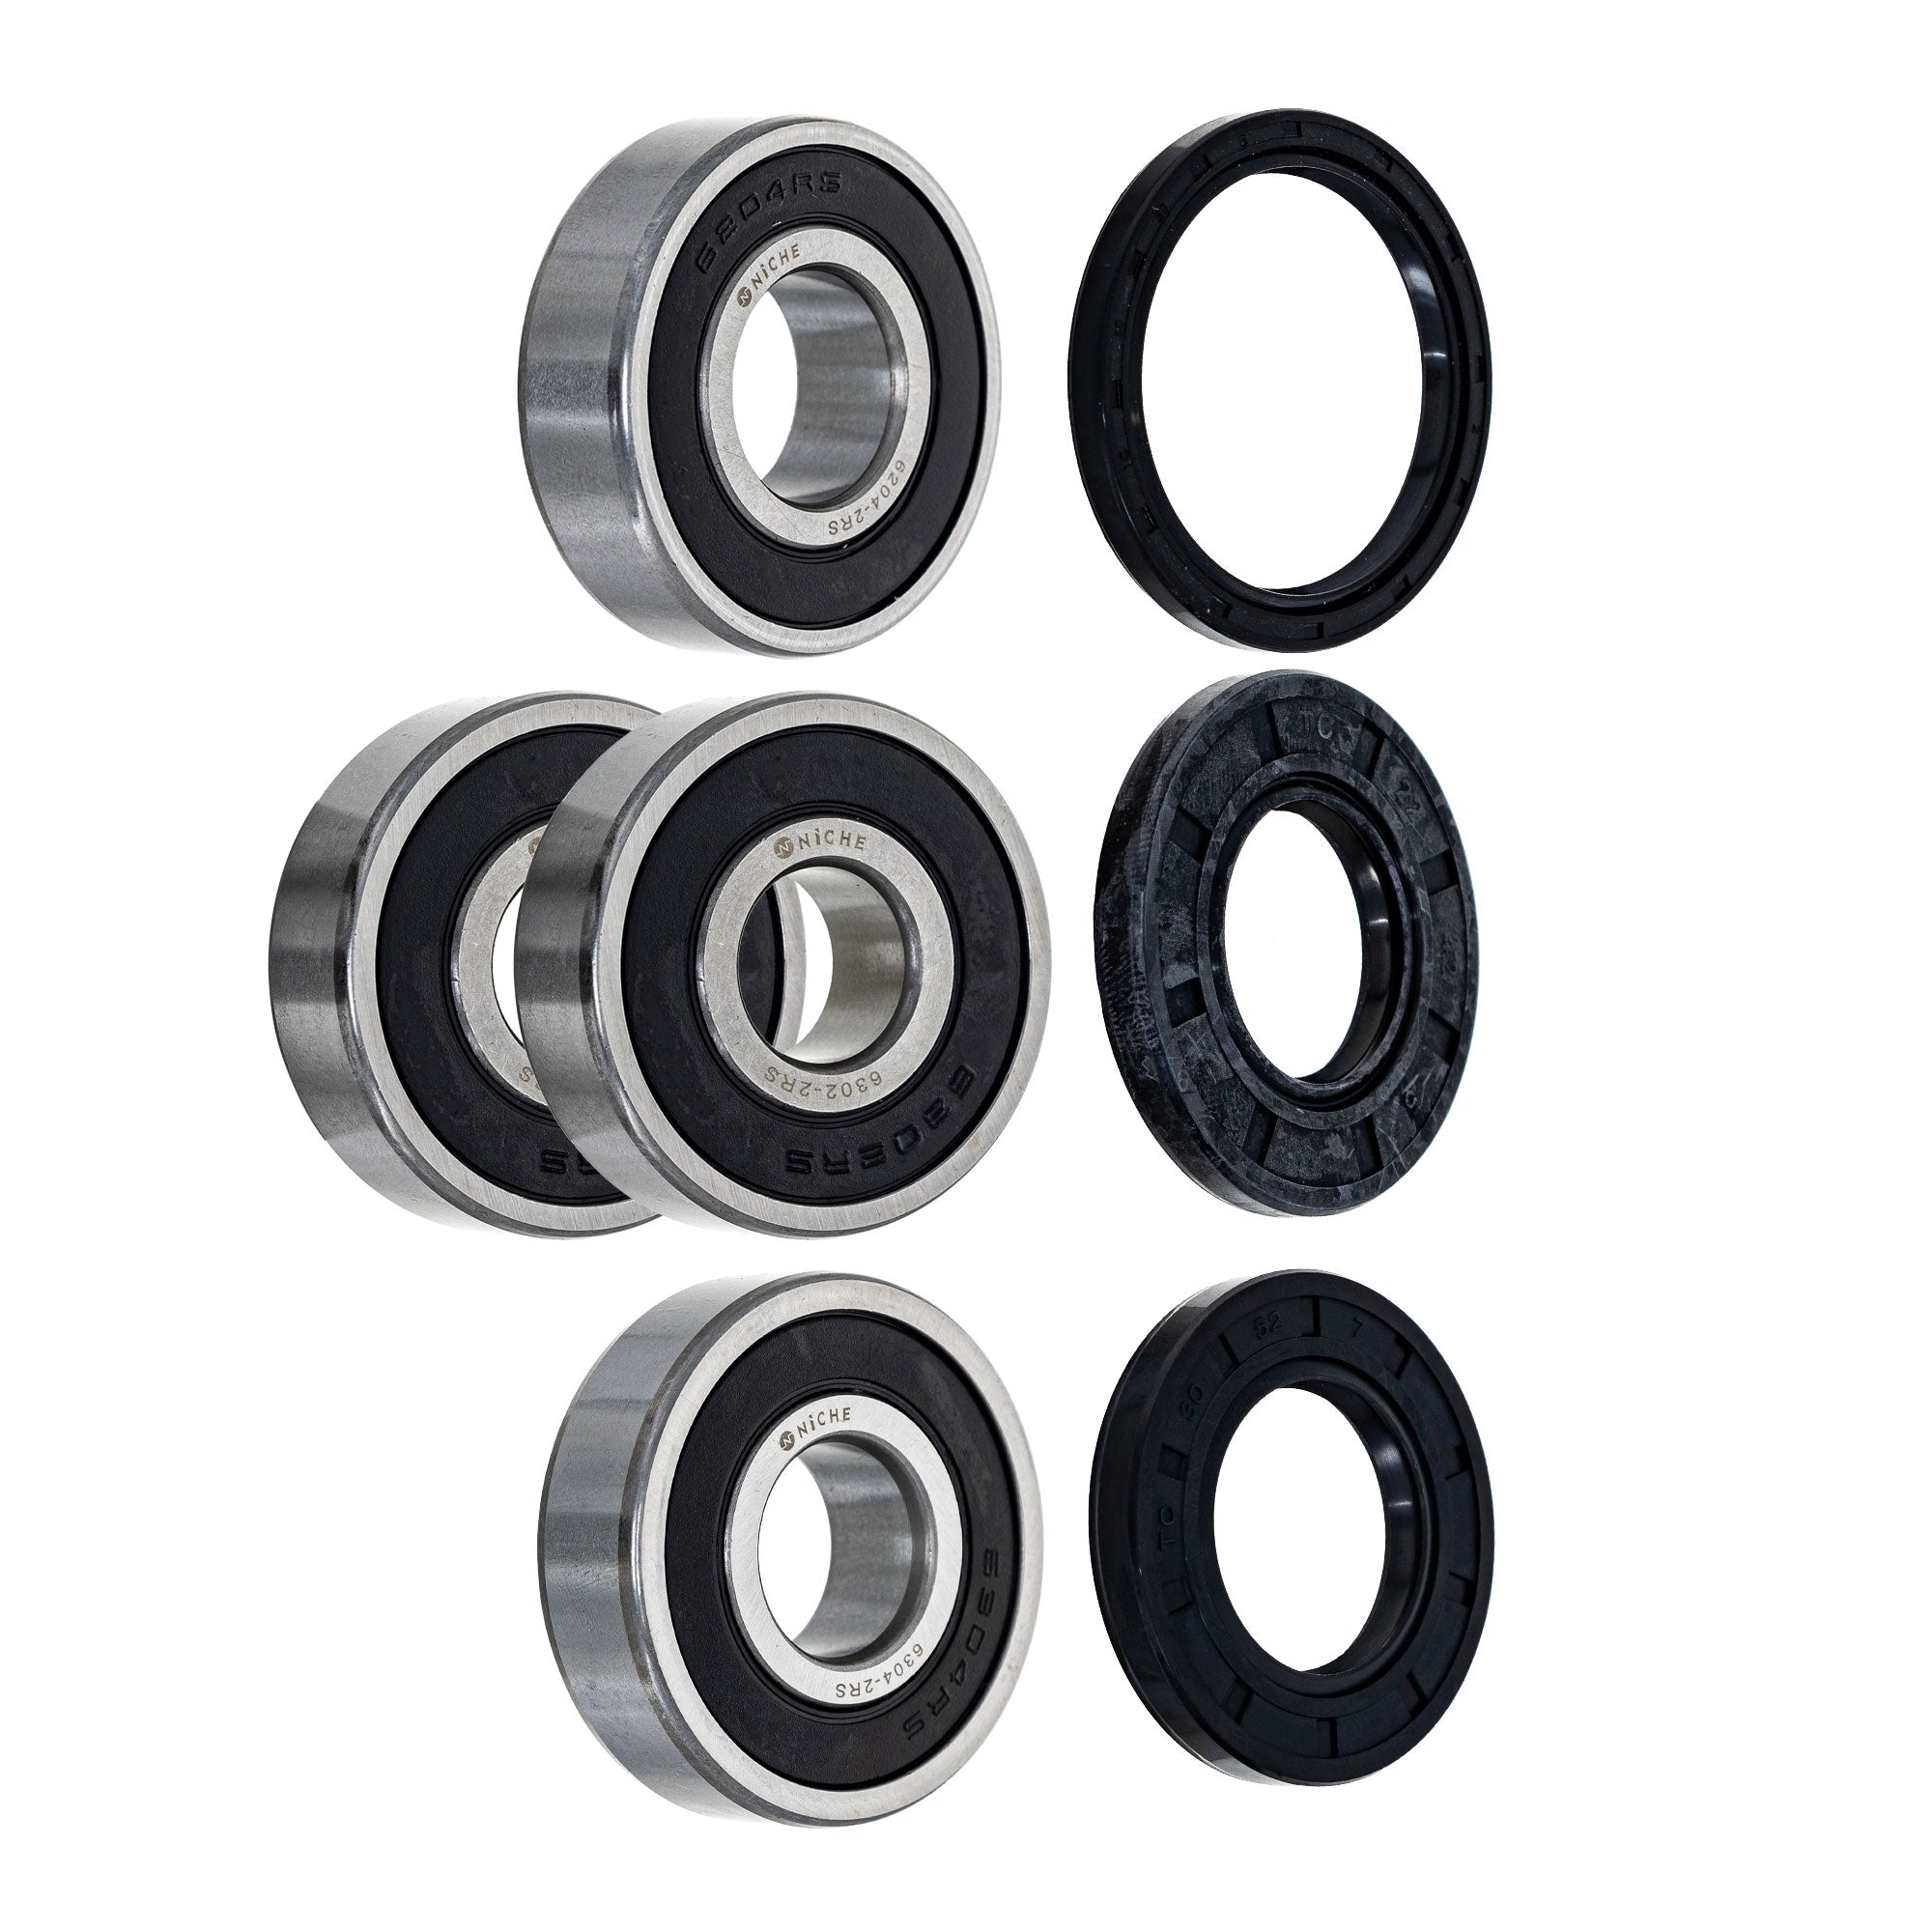 Wheel Bearing Seal Kit for zOTHER Ref No XR600R XR350R XR250R XR250L NICHE MK1009267